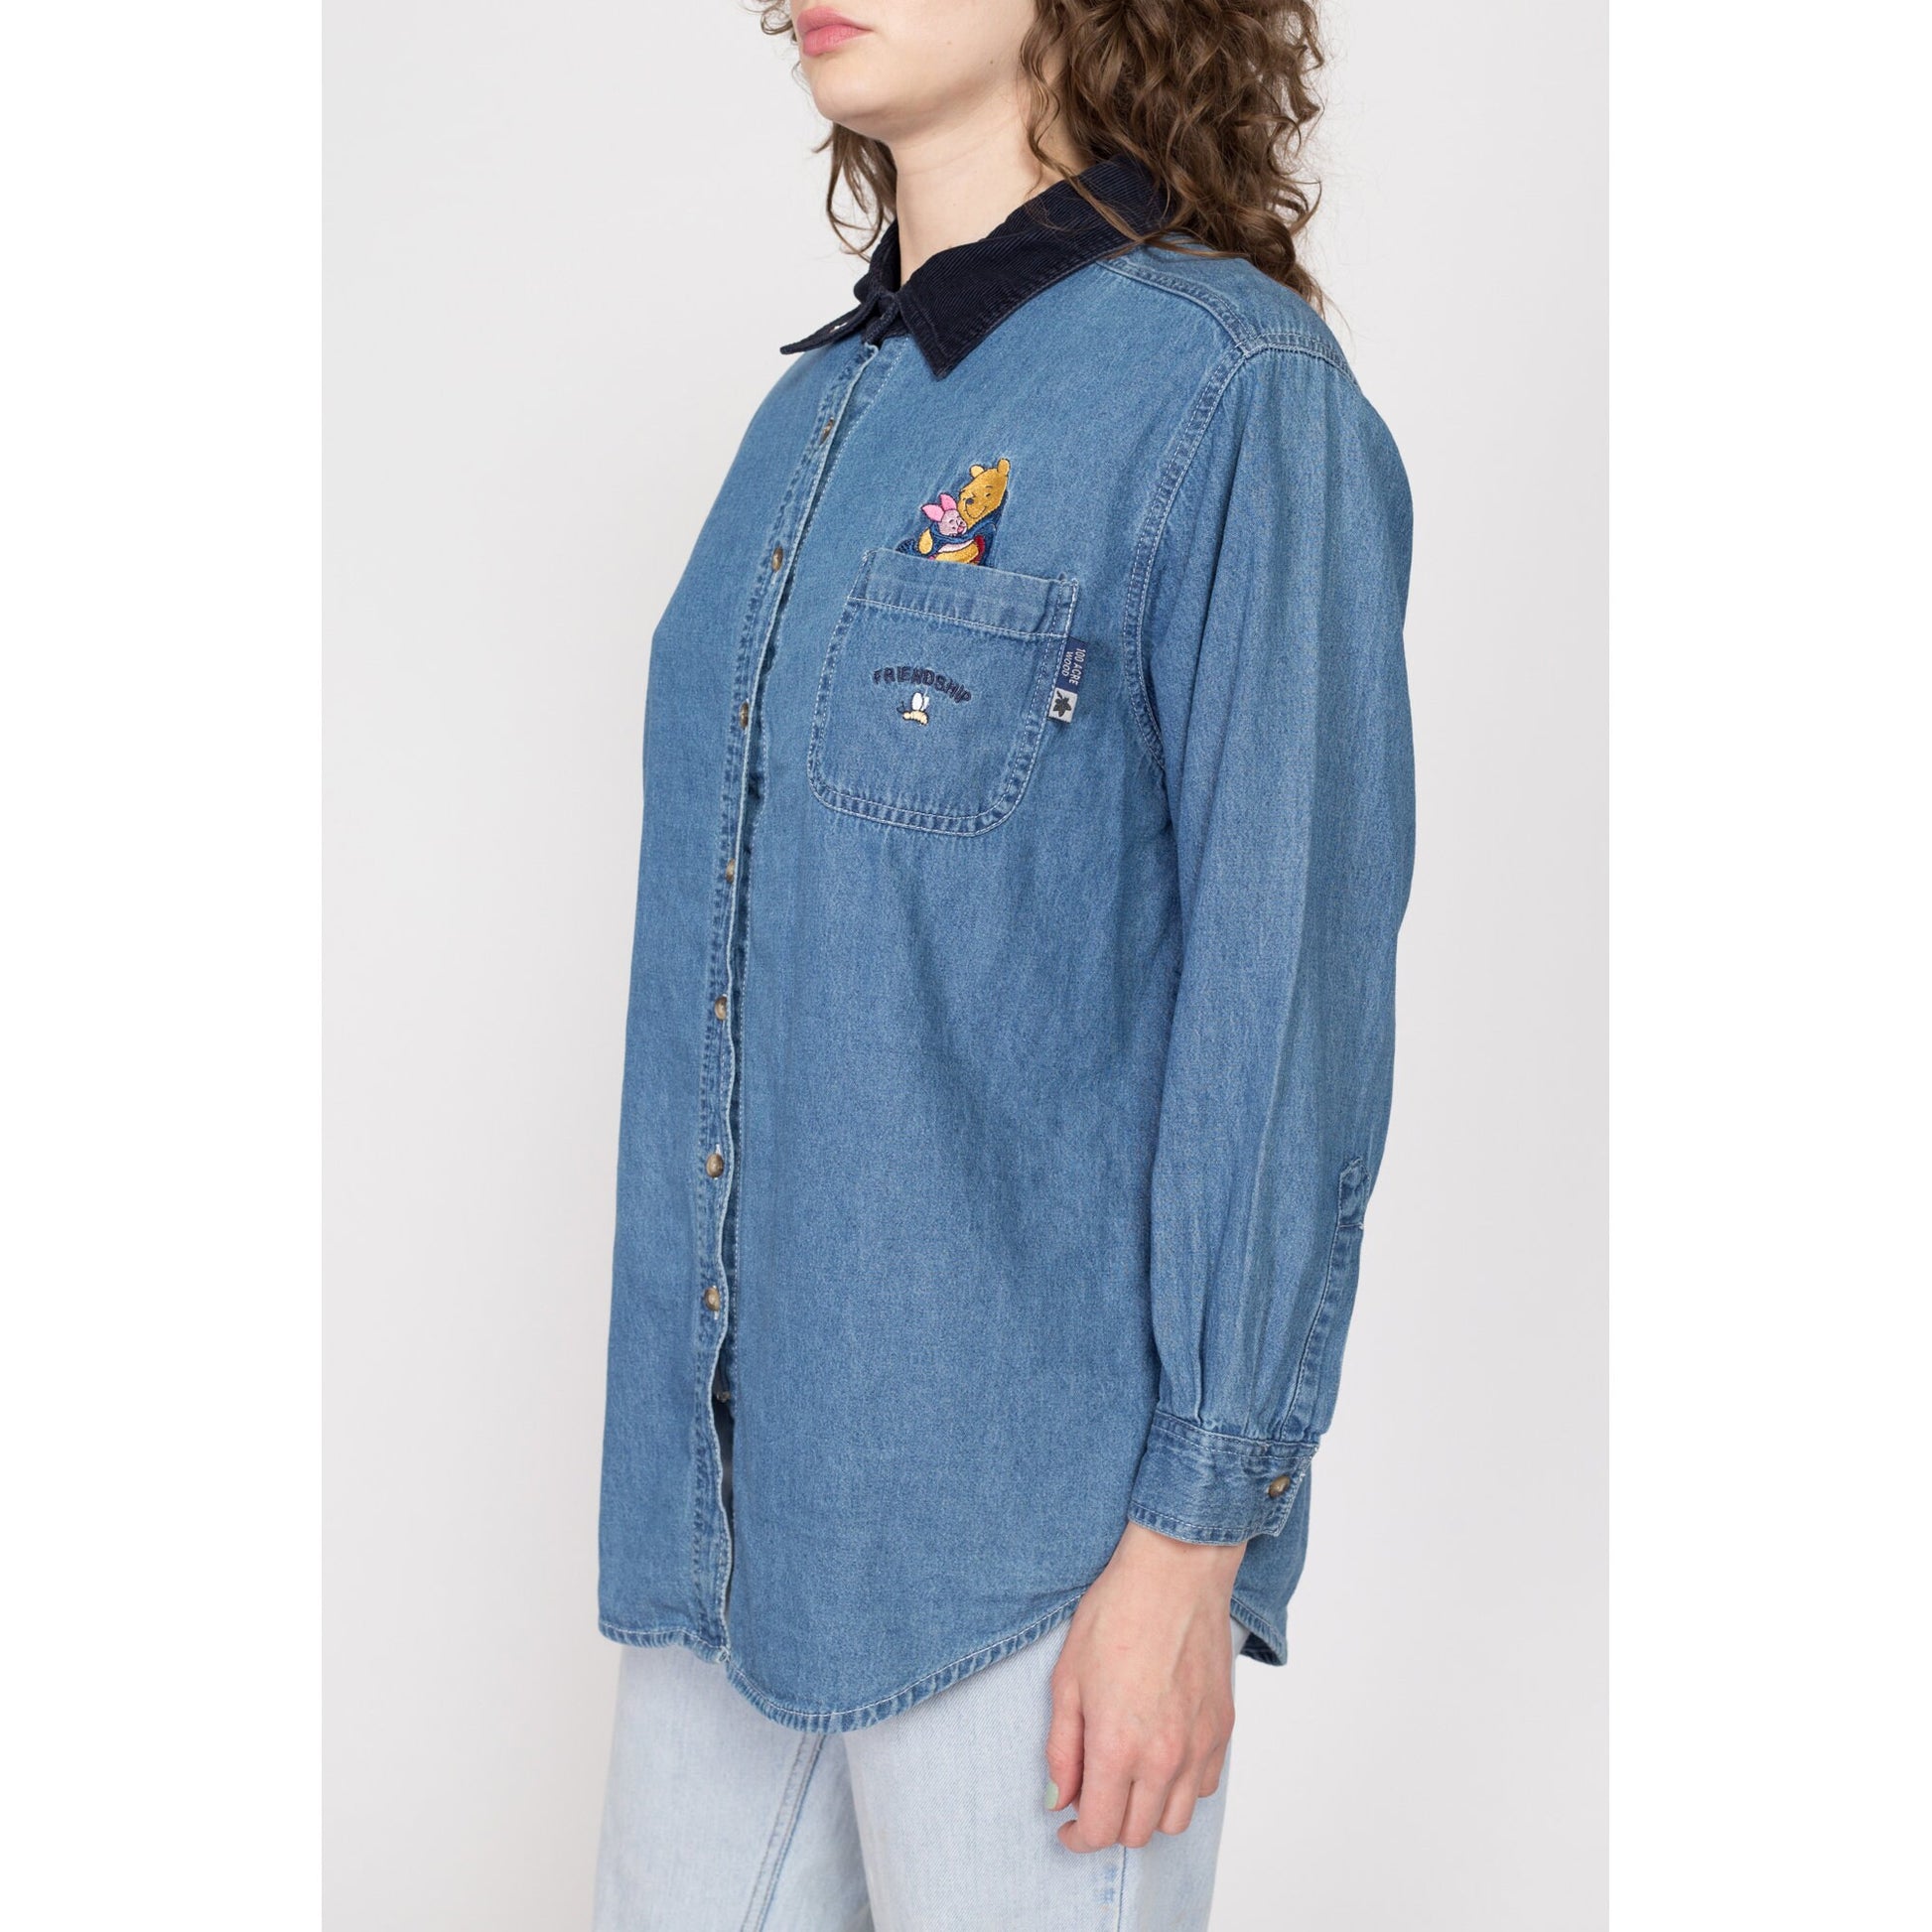 XL 90s Winnie The Pooh & Piglet Friendship Chambray Shirt | Vintage Blue Jean Button Up Disney Cartoon Collared Long Sleeve Denim Top